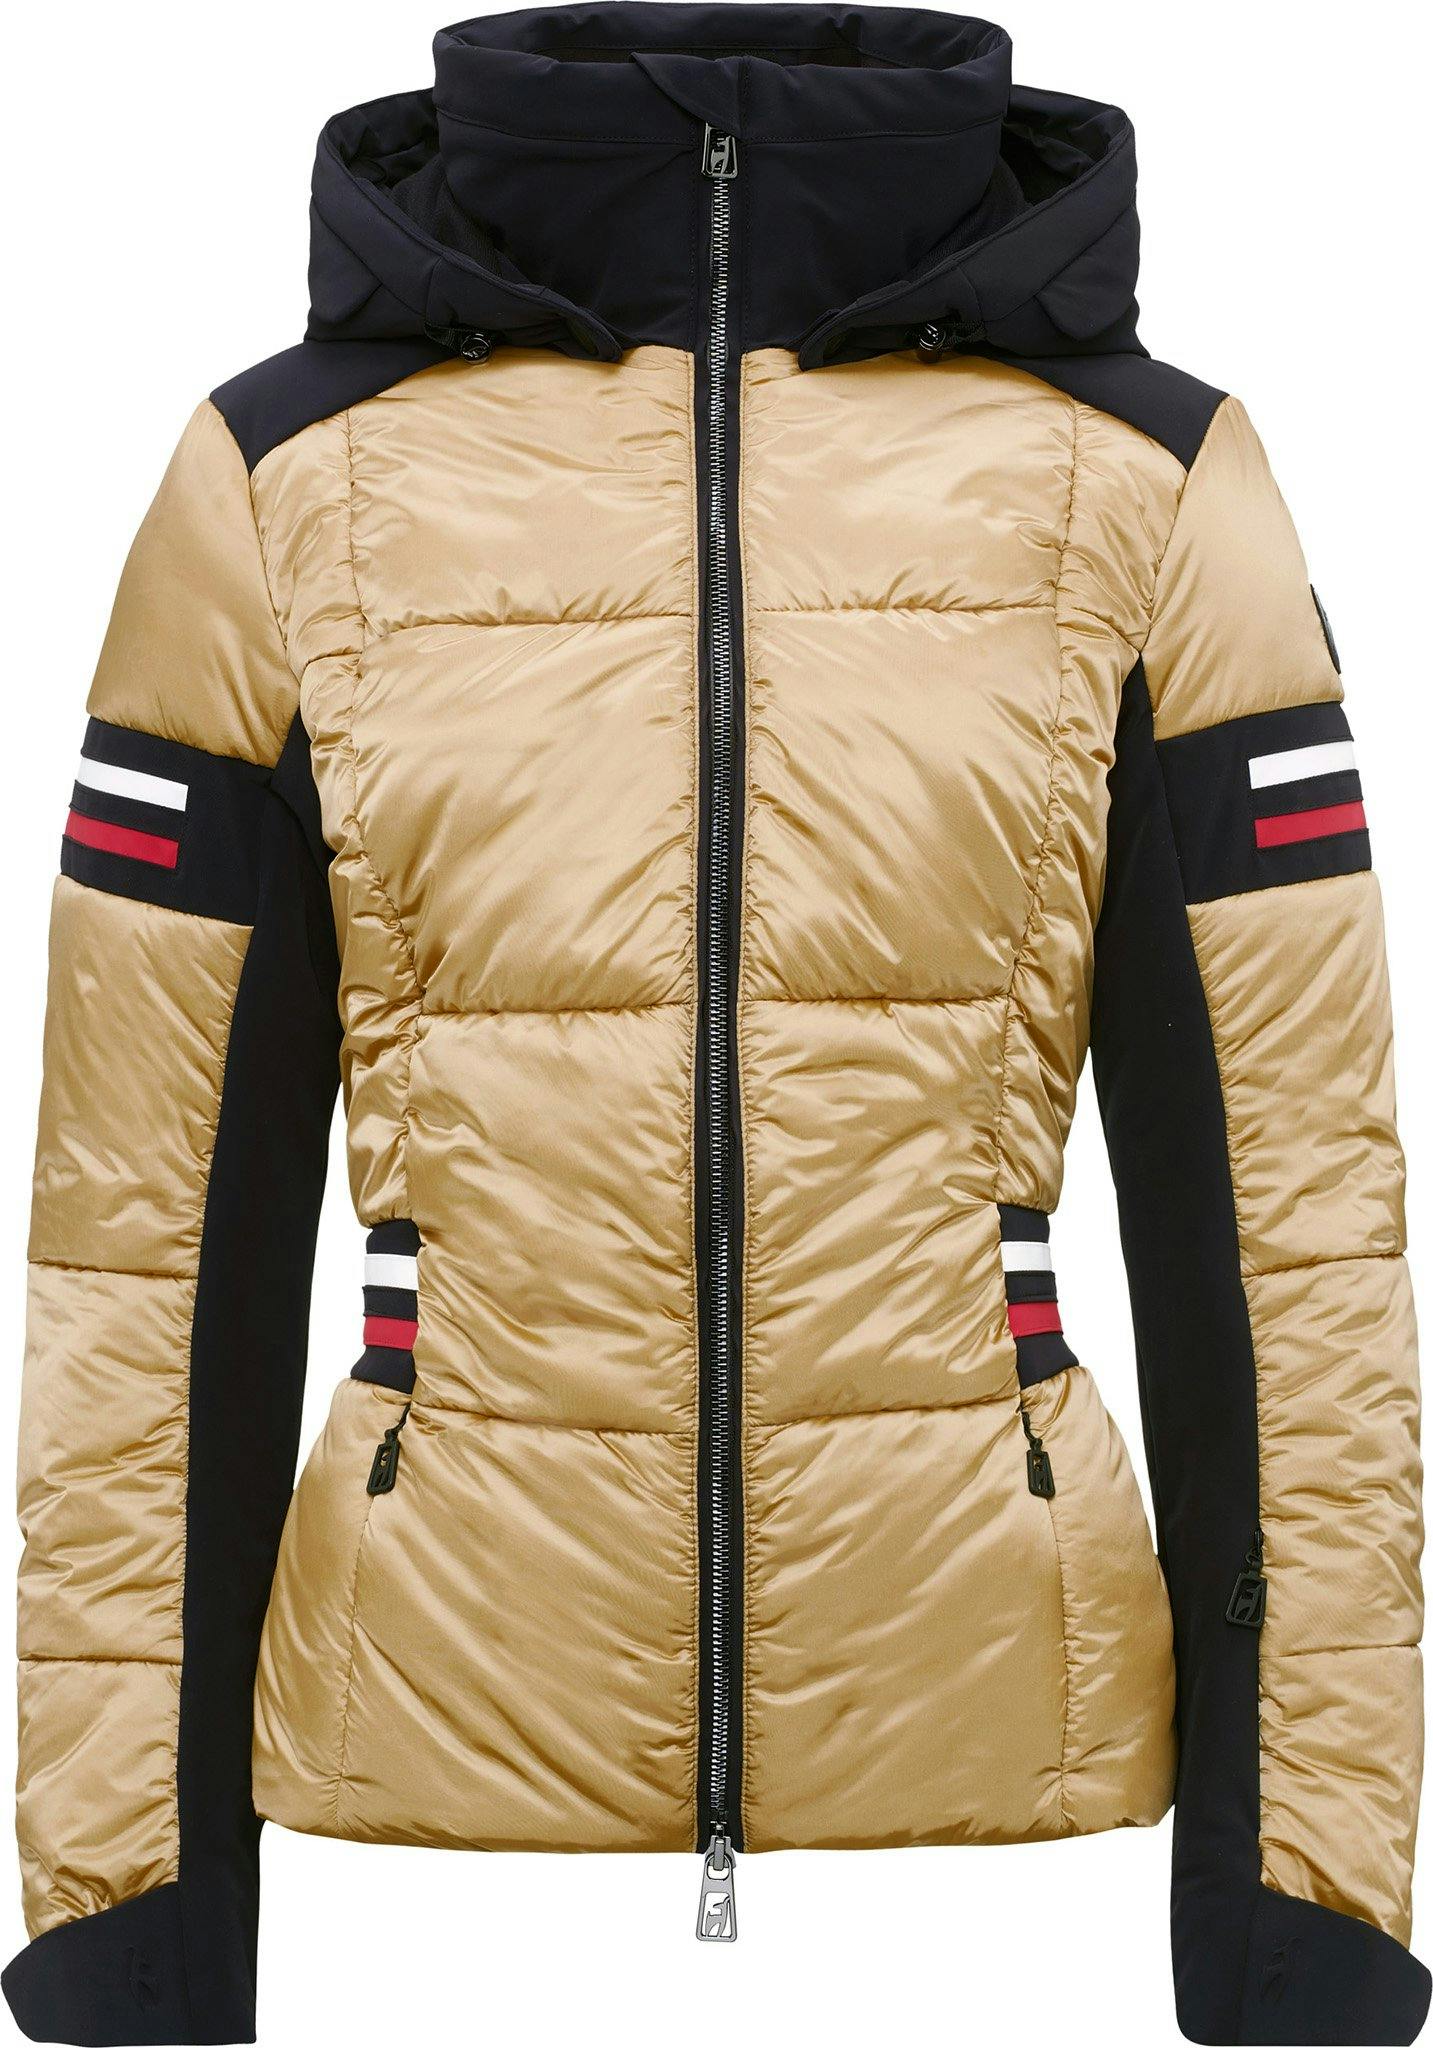 Product gallery image number 1 for product Nana Splendid Ski Jacket - Women's